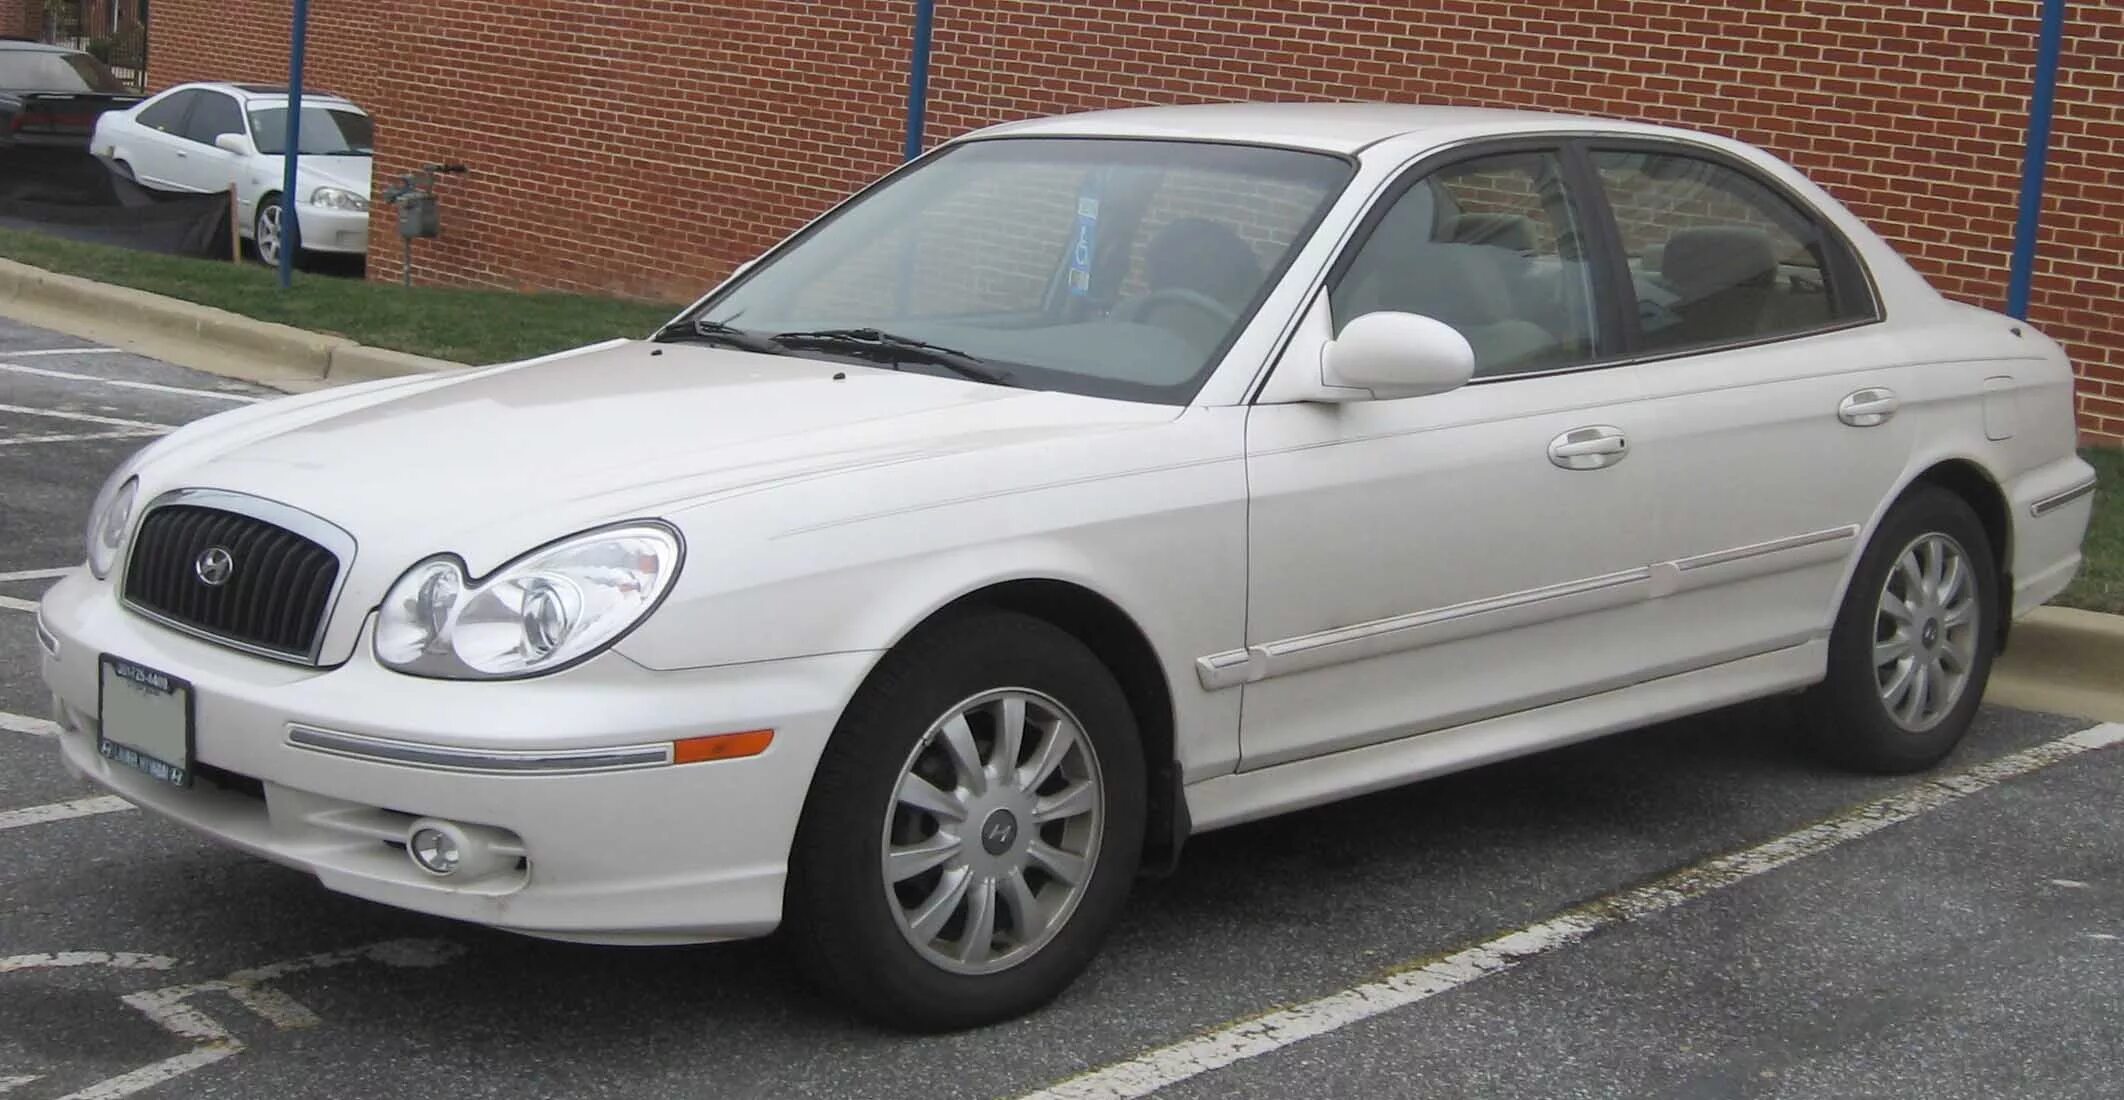 Соната 2005 г. Hyundai Sonata 2005. Хендай Соната 2005. Хендай Соната 4 2005. Hyundai Sonata GLS 2005.